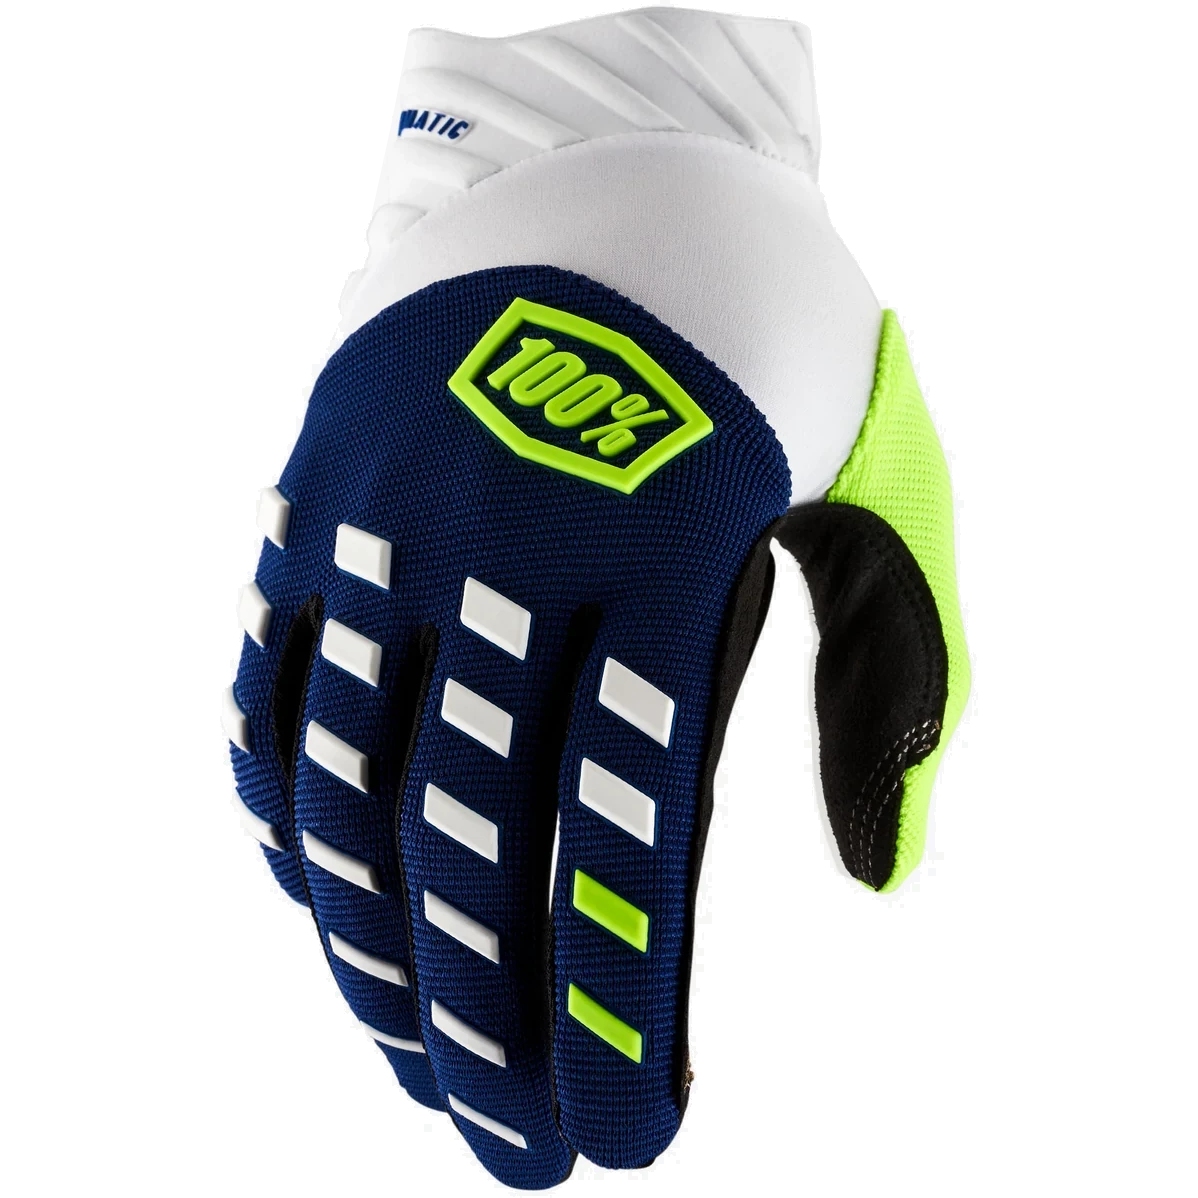 Productfoto van 100% Airmatic Bike Gloves - navy/white